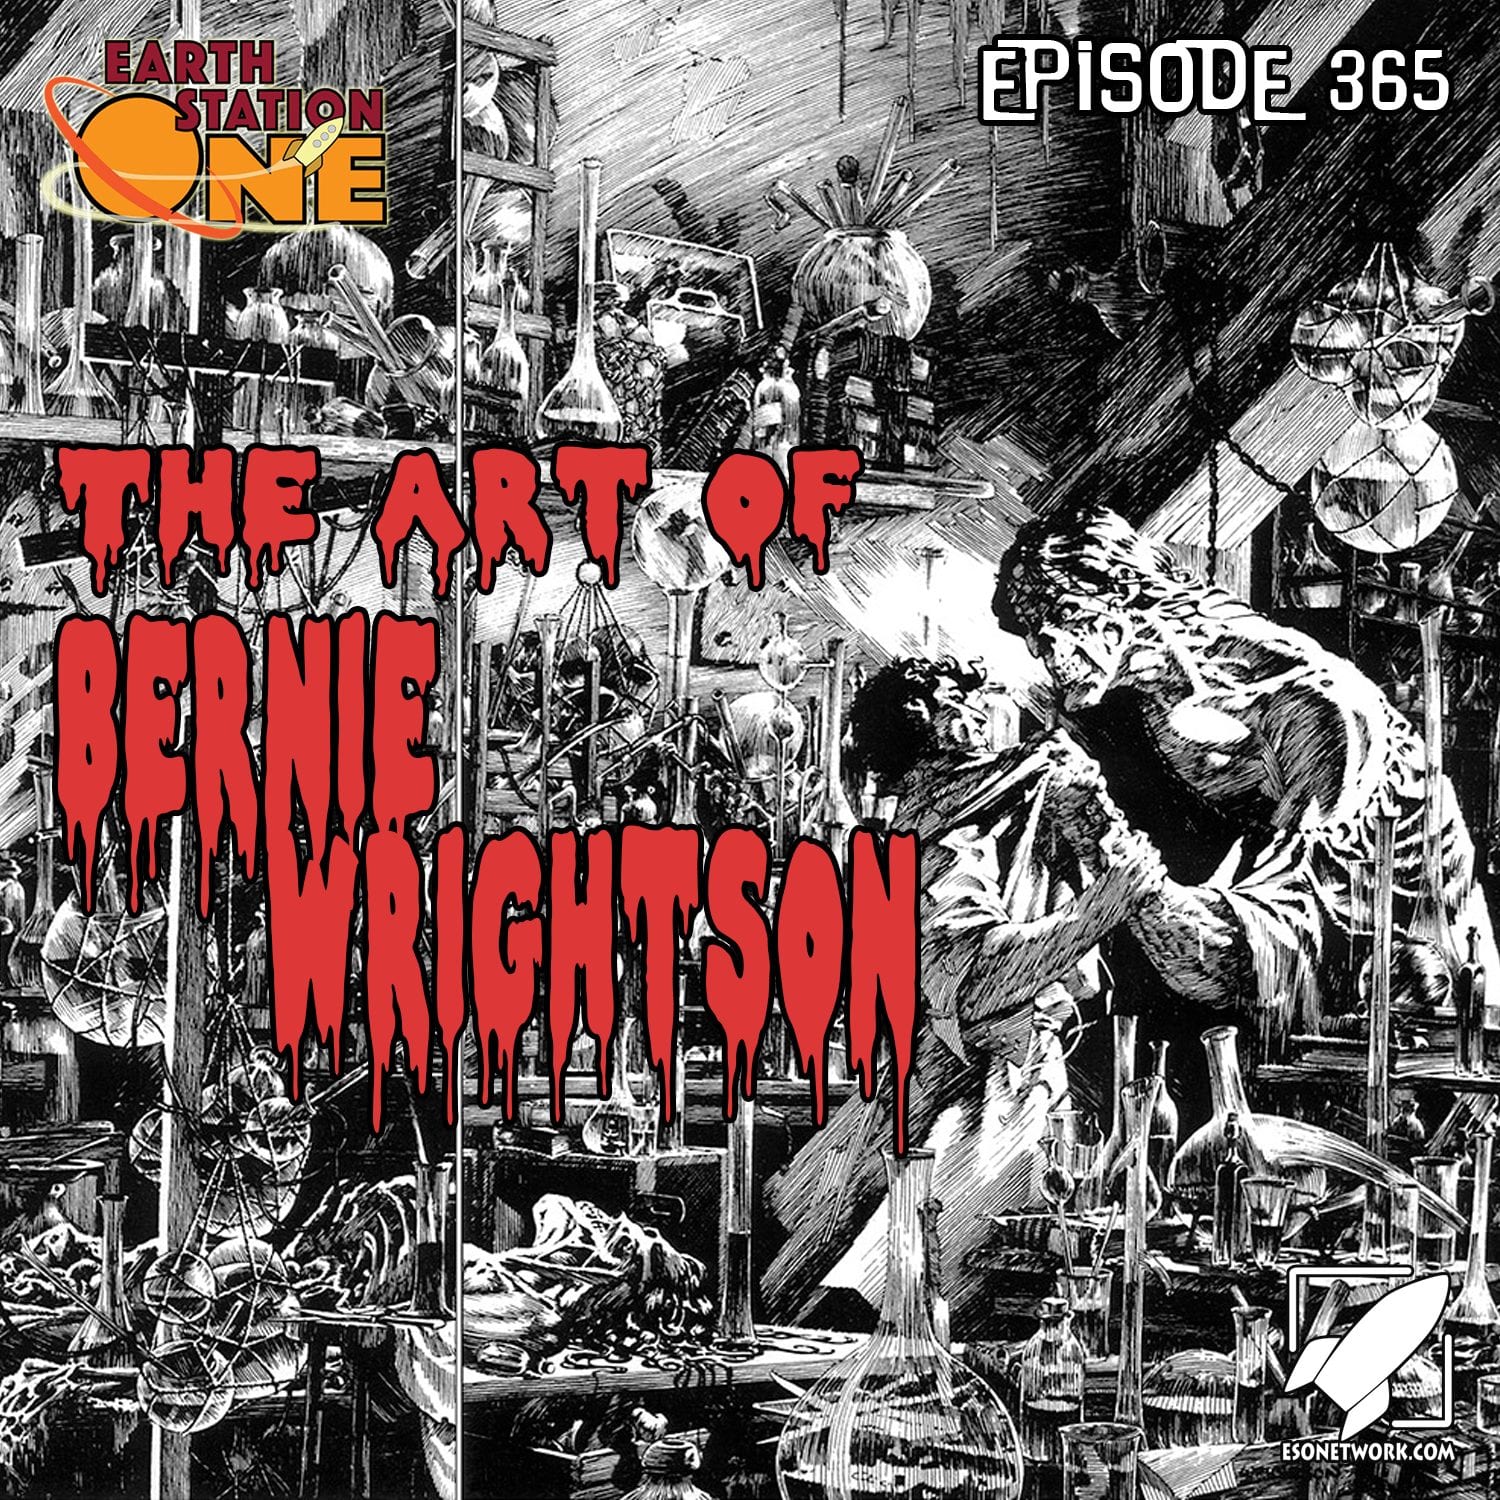 Earth Station One Podcast Ep 365 - Artist Spotlight on Bernie Wrightson